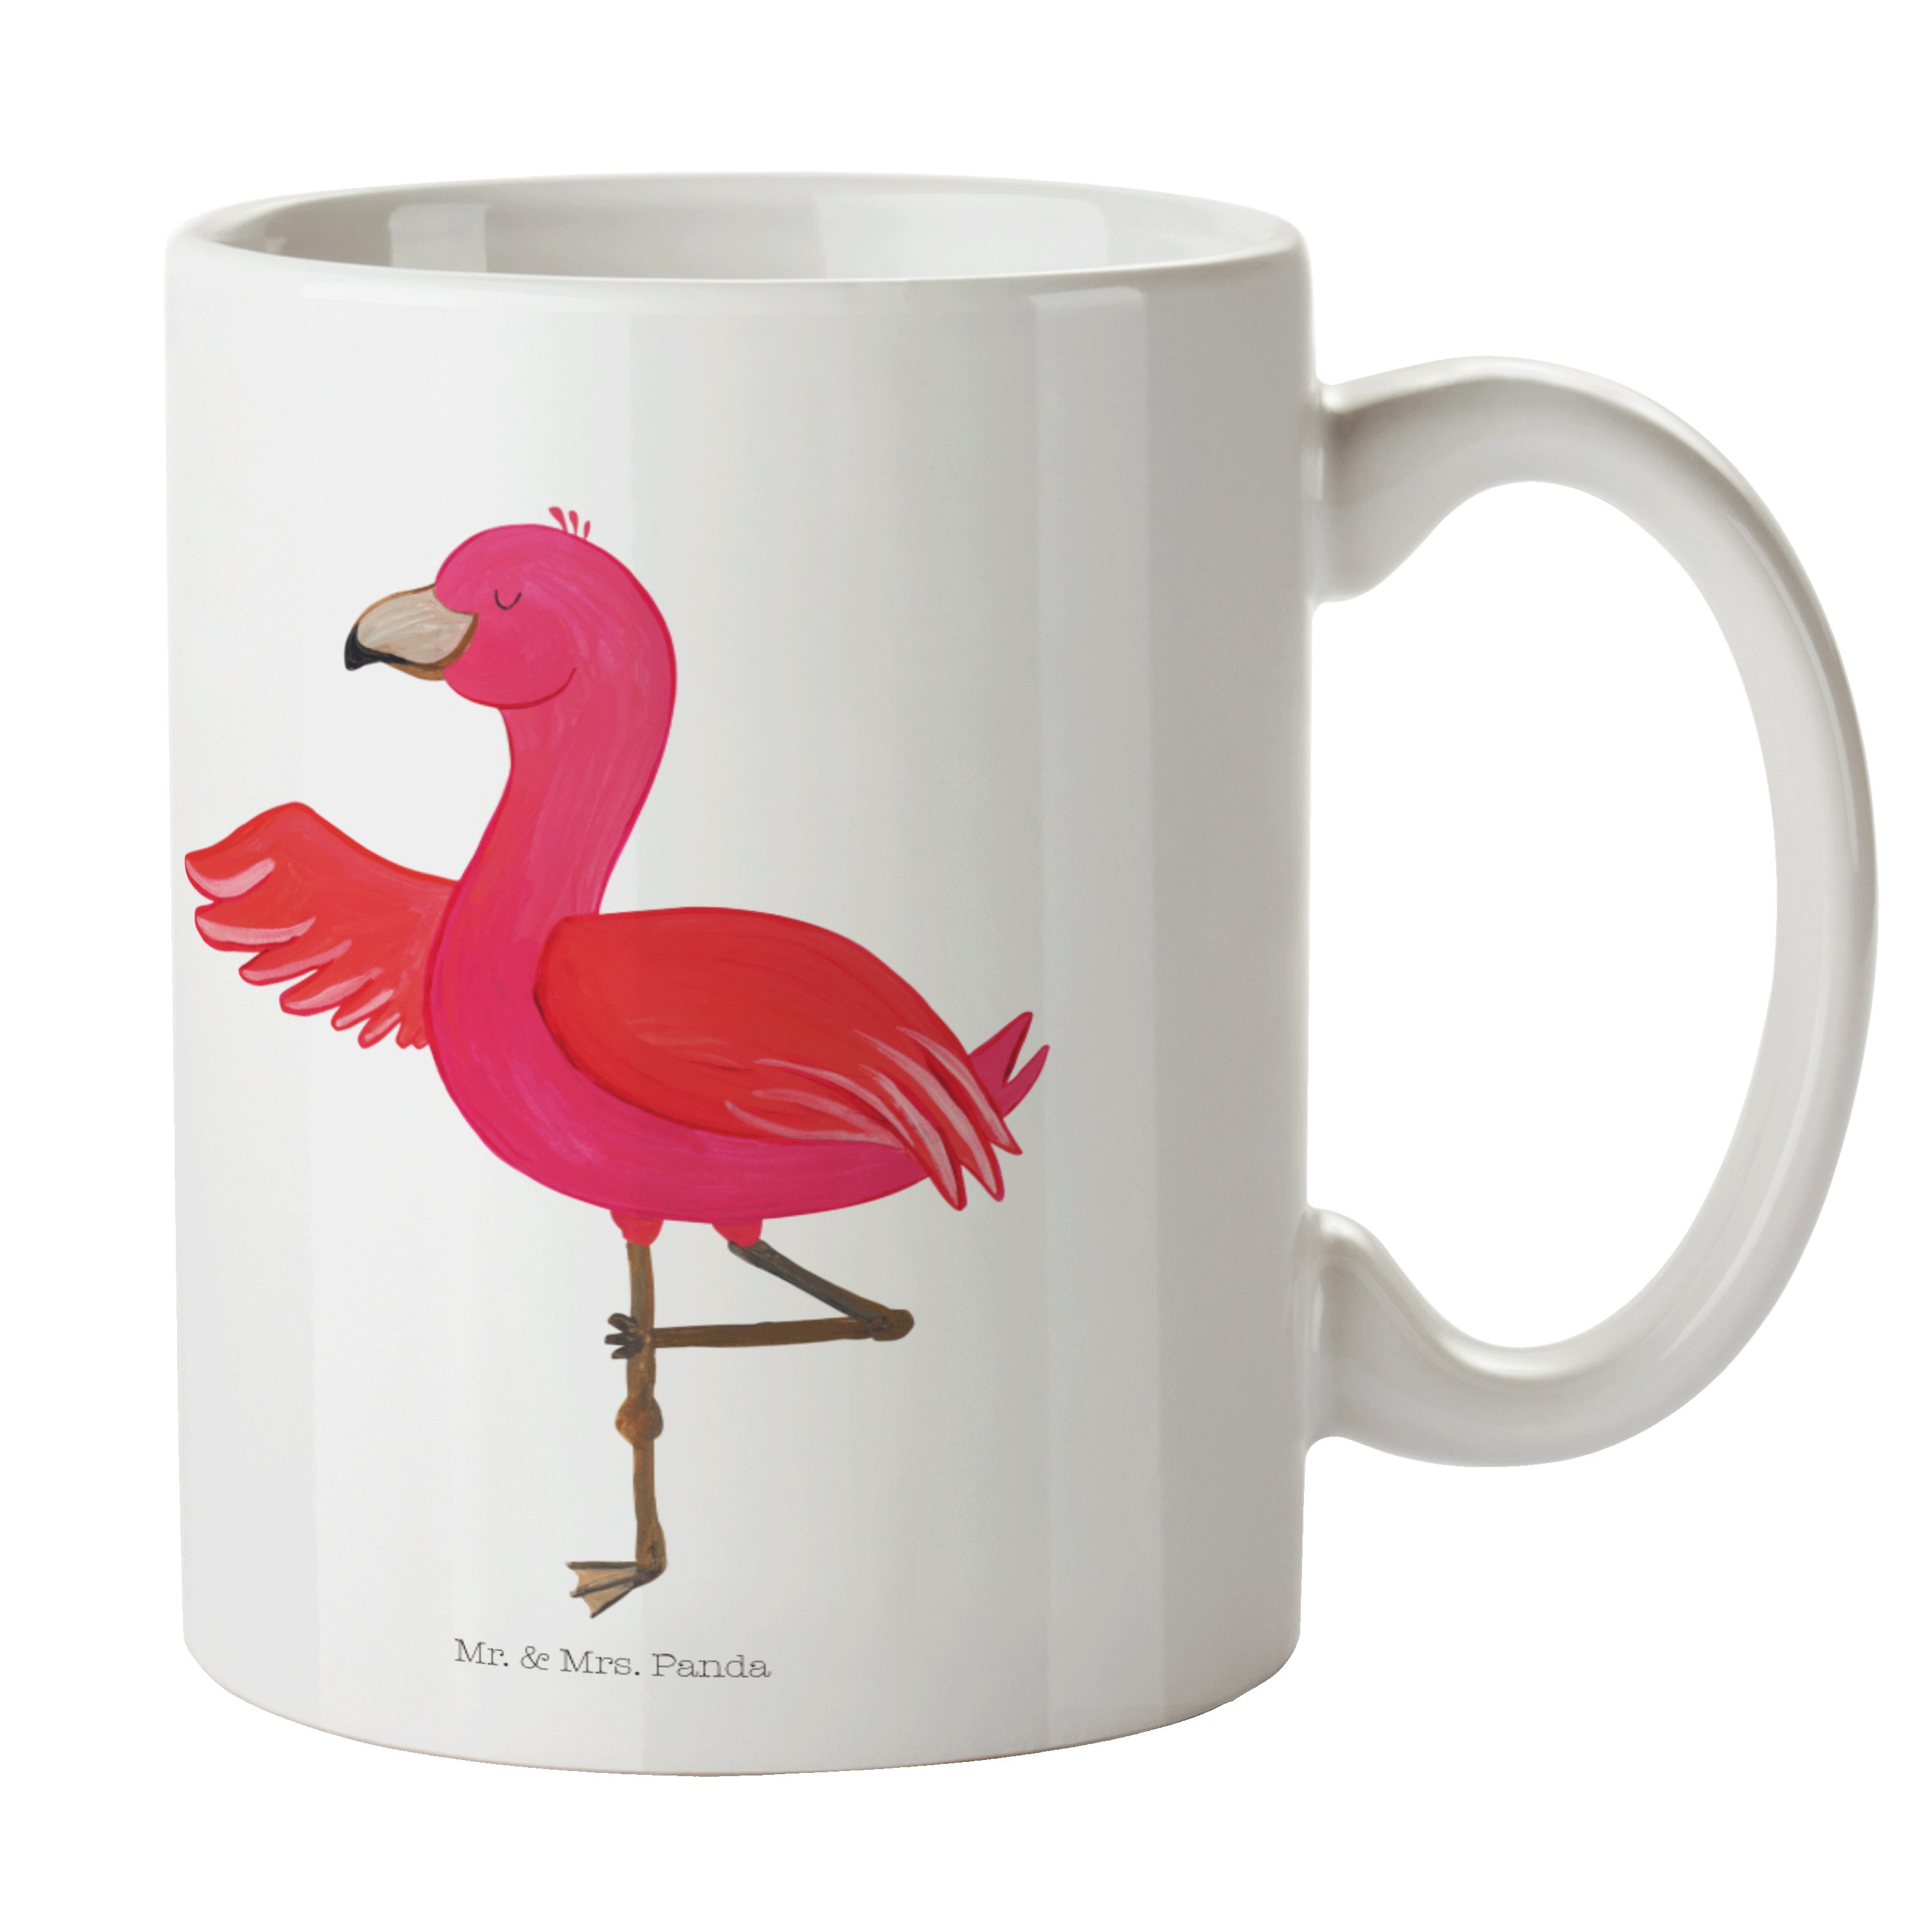 Mr. & Mrs. Panda Tasse Flamingo Yoga - Weiß - Geschenk, Entspannung, Yoga Urlaub, Tasse, Tee, Keramik